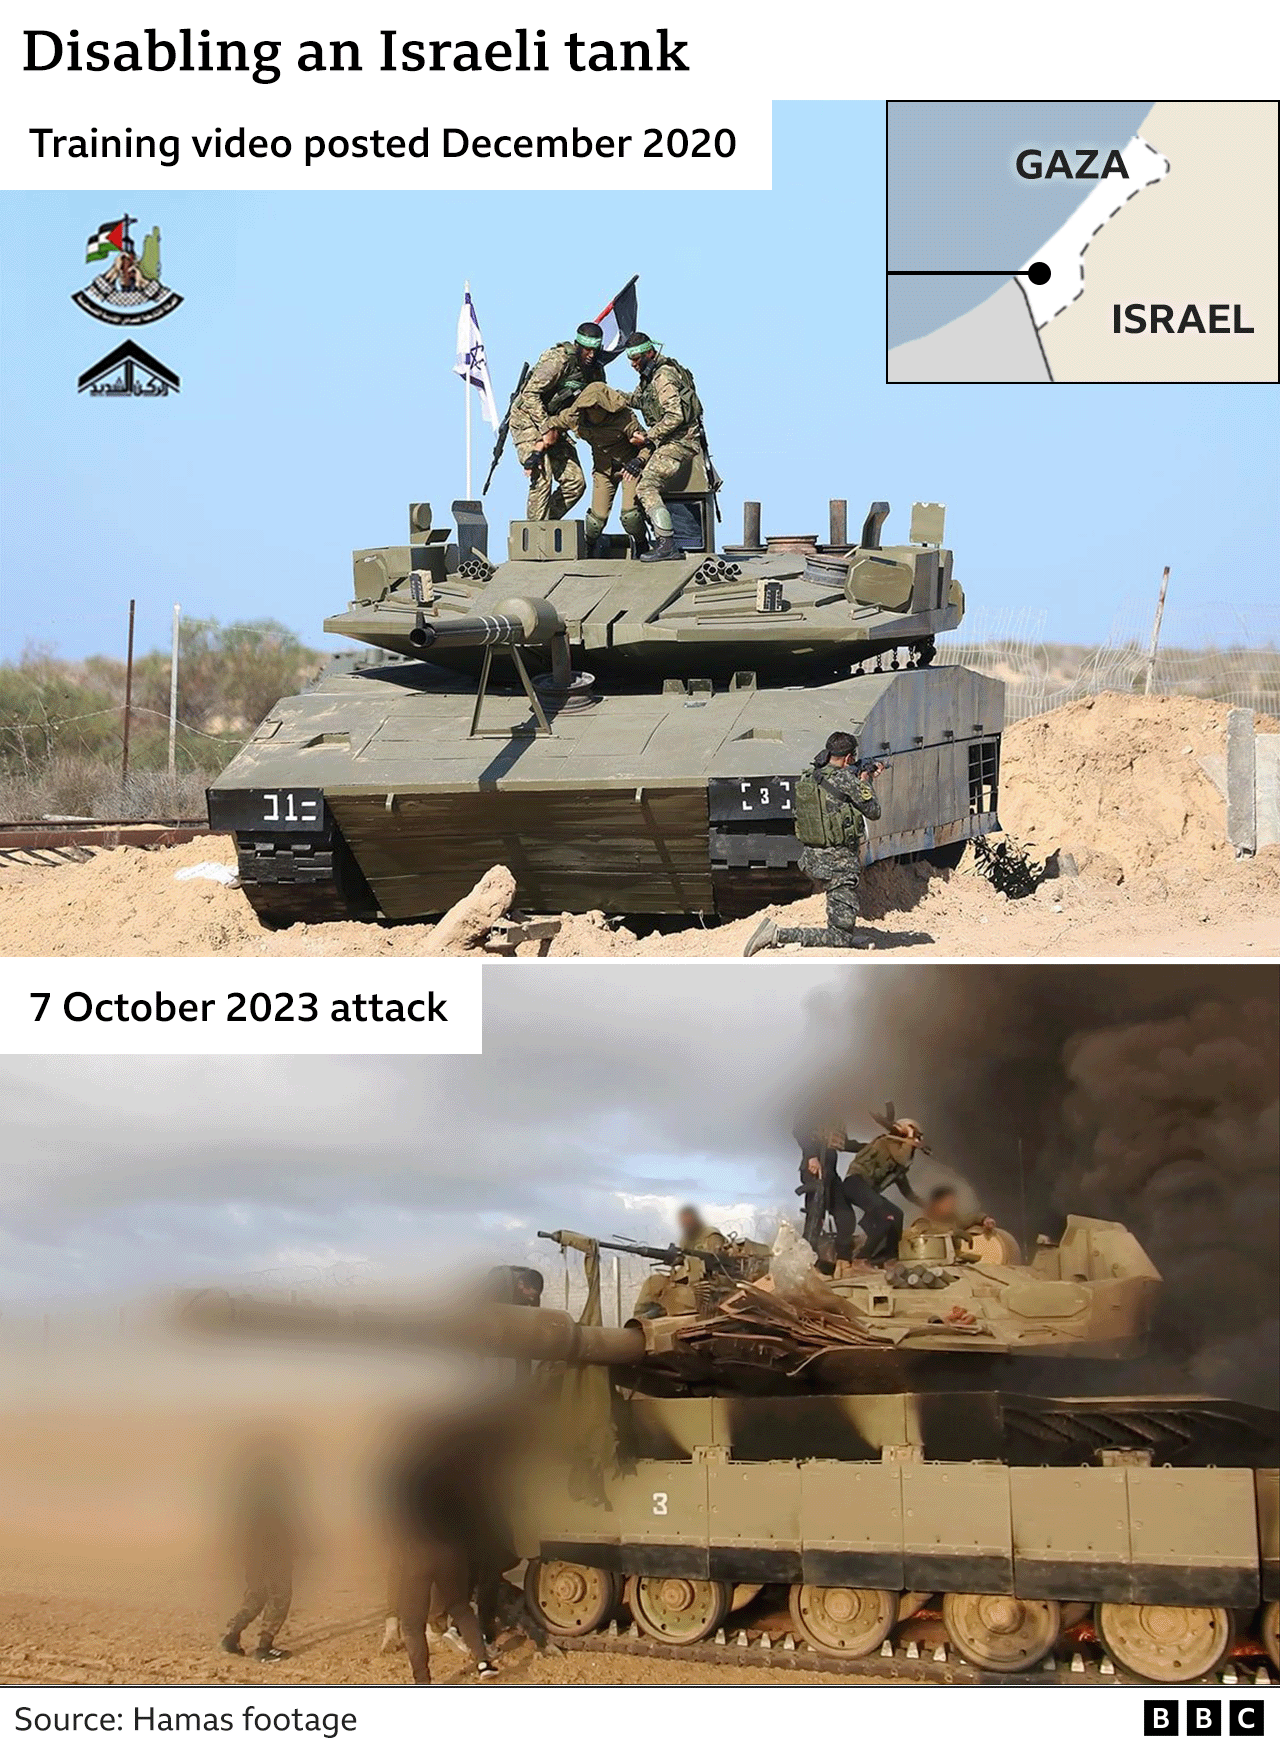 Images of Hamas capturing tank crew members